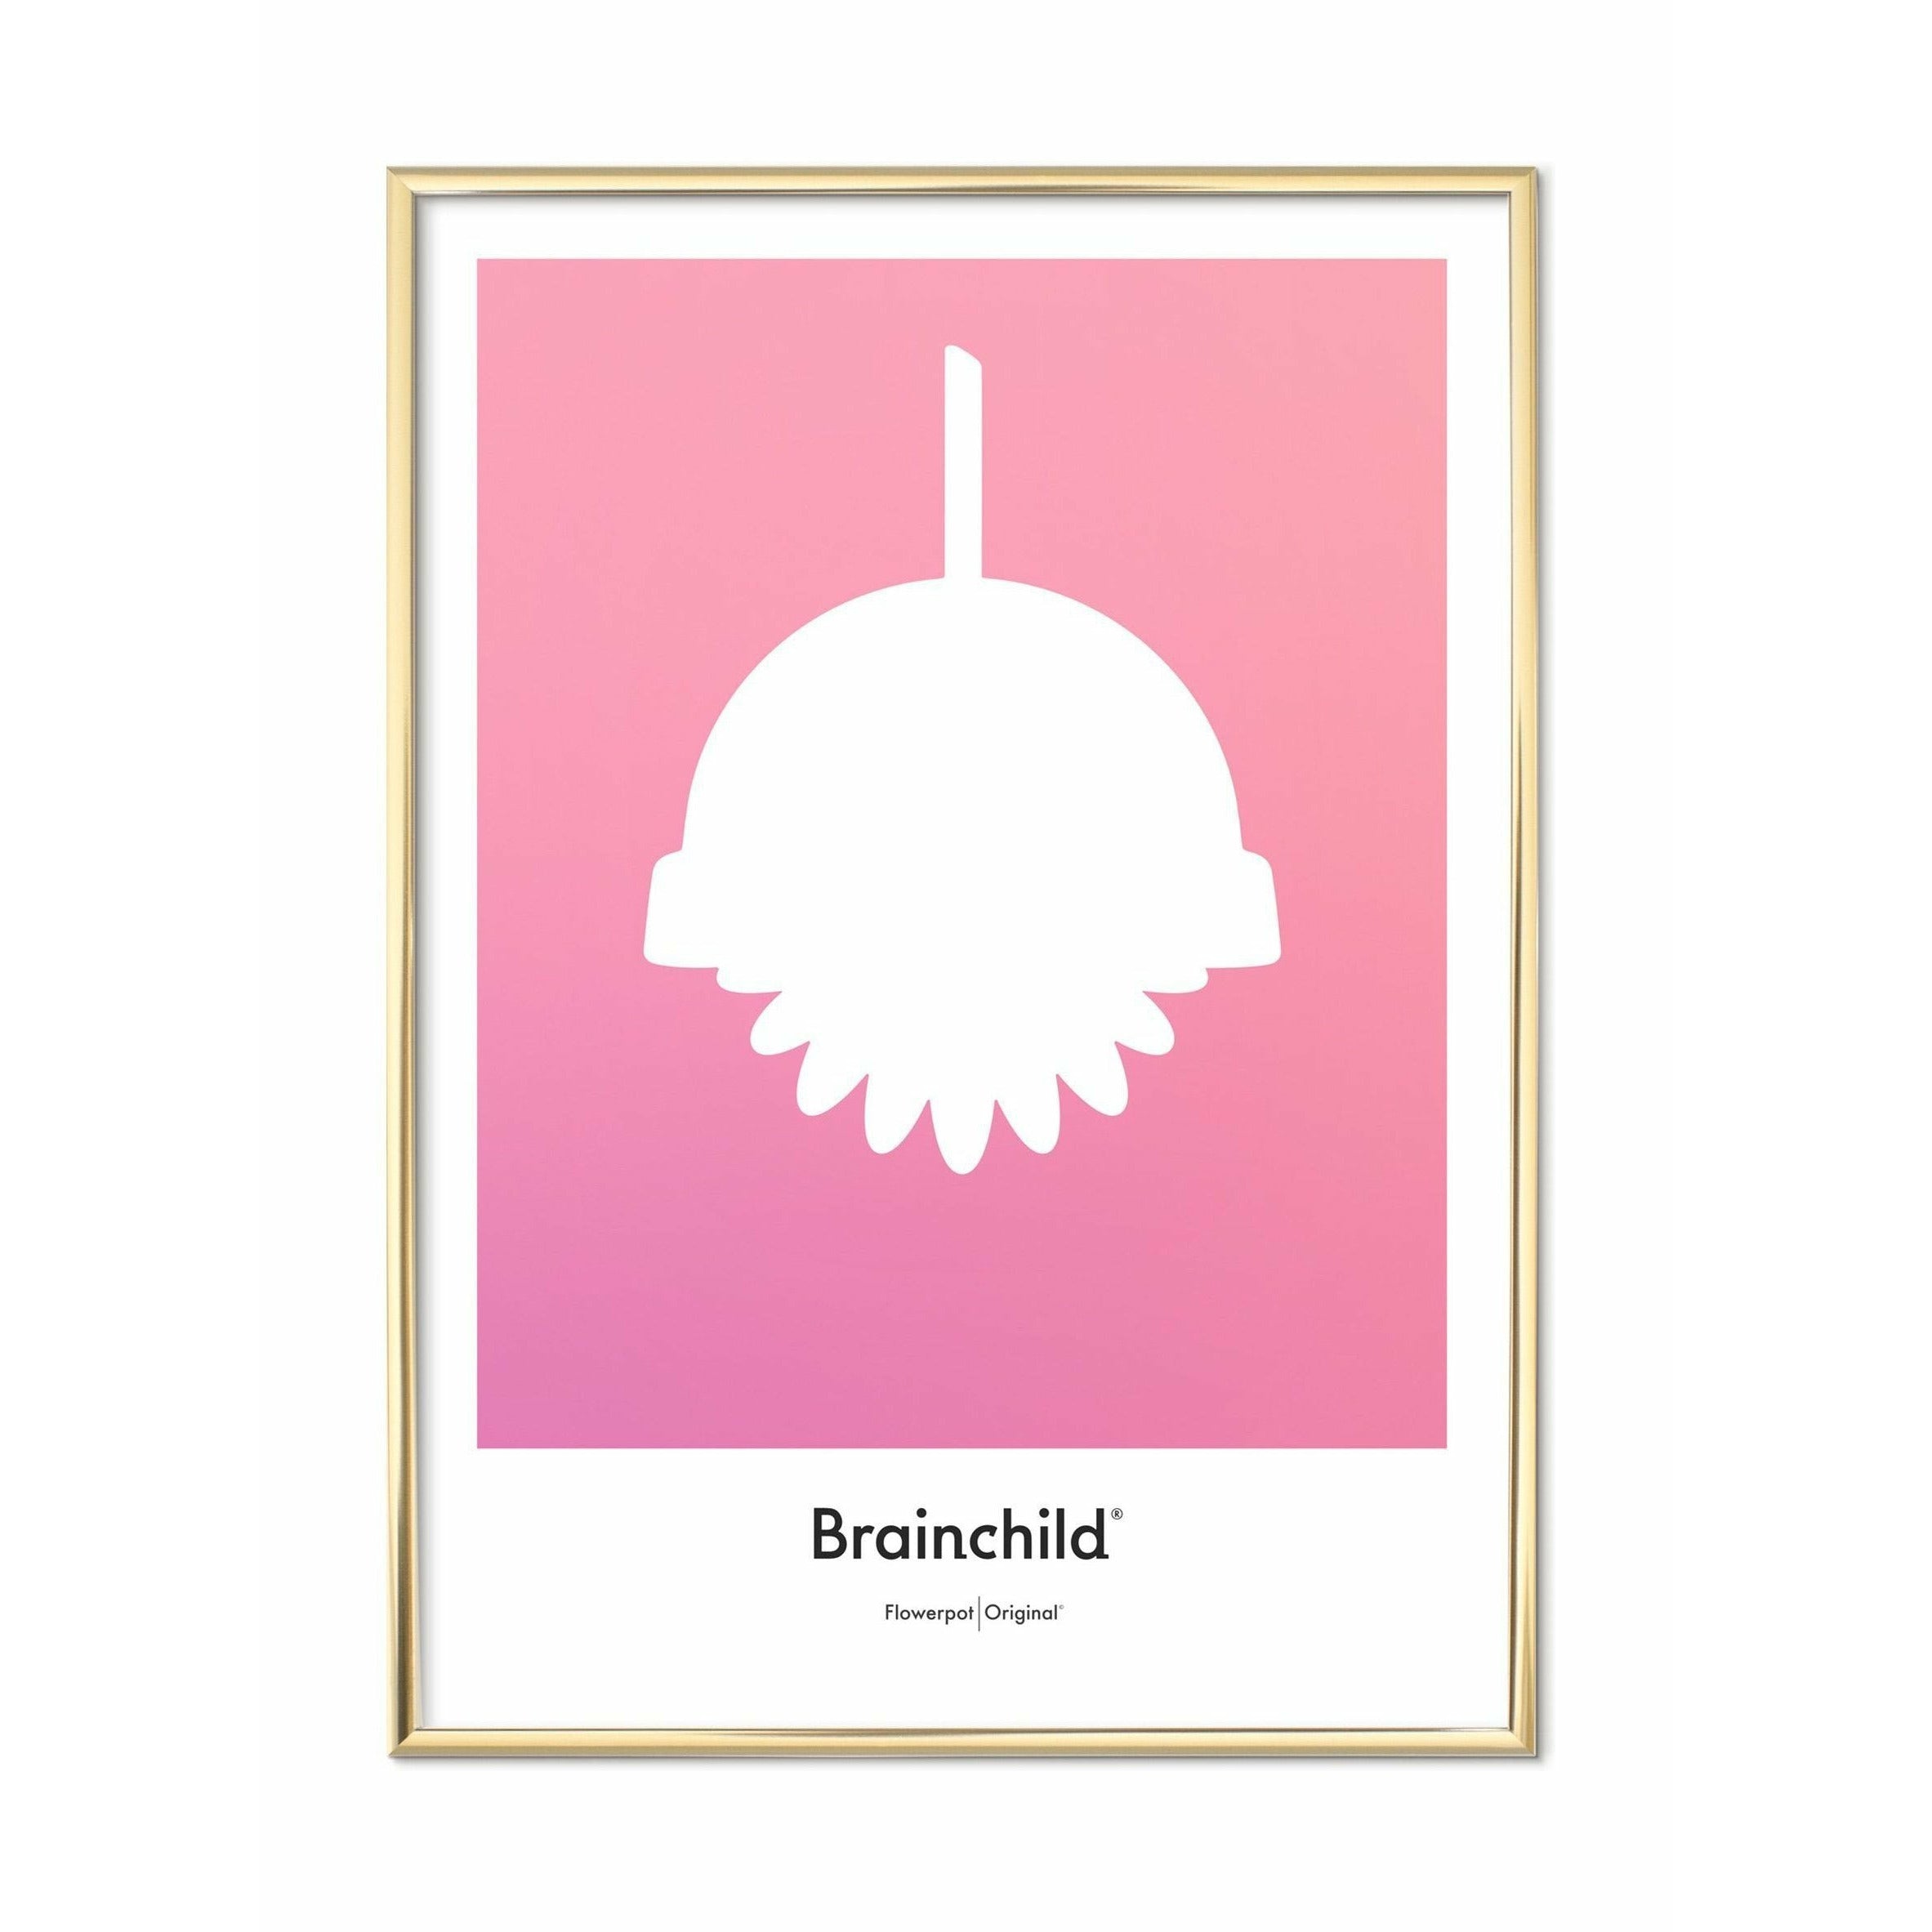 Brainchild Flowerpot Design Icon Poster, Brass Colored Frame A5, Pink